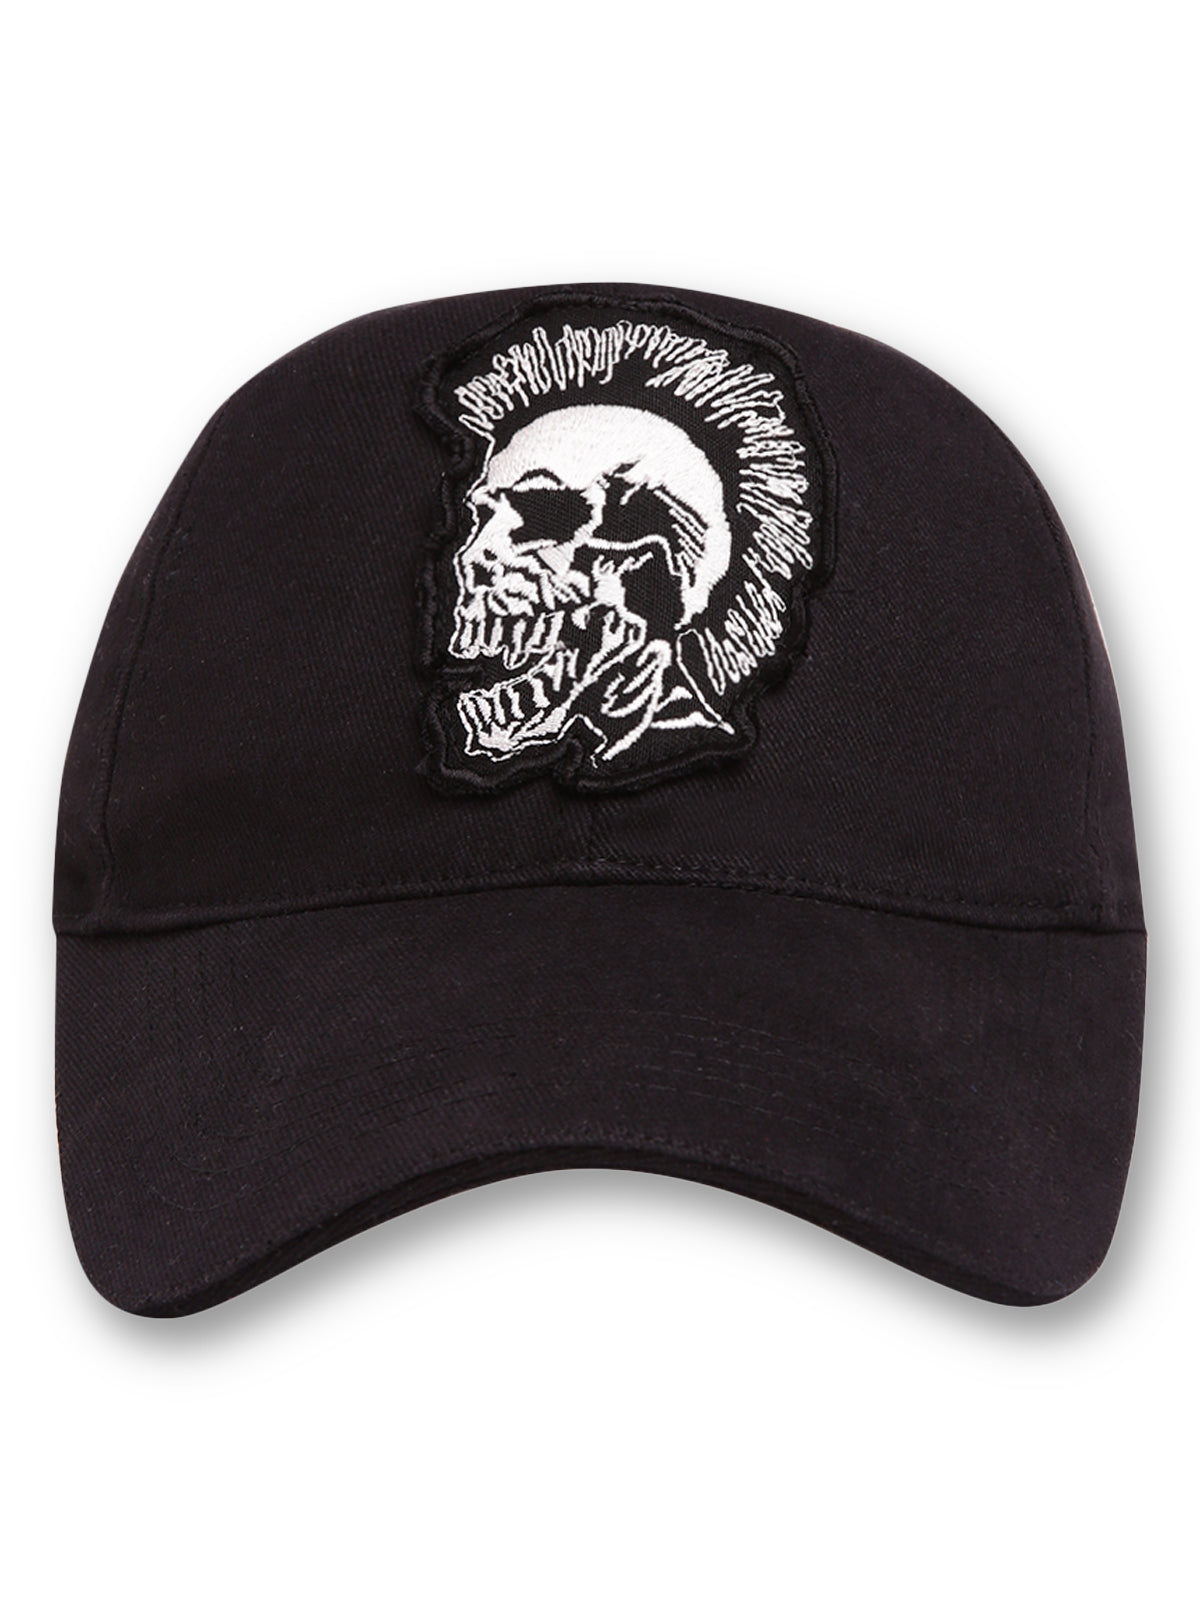 Punk Skull Black Cap